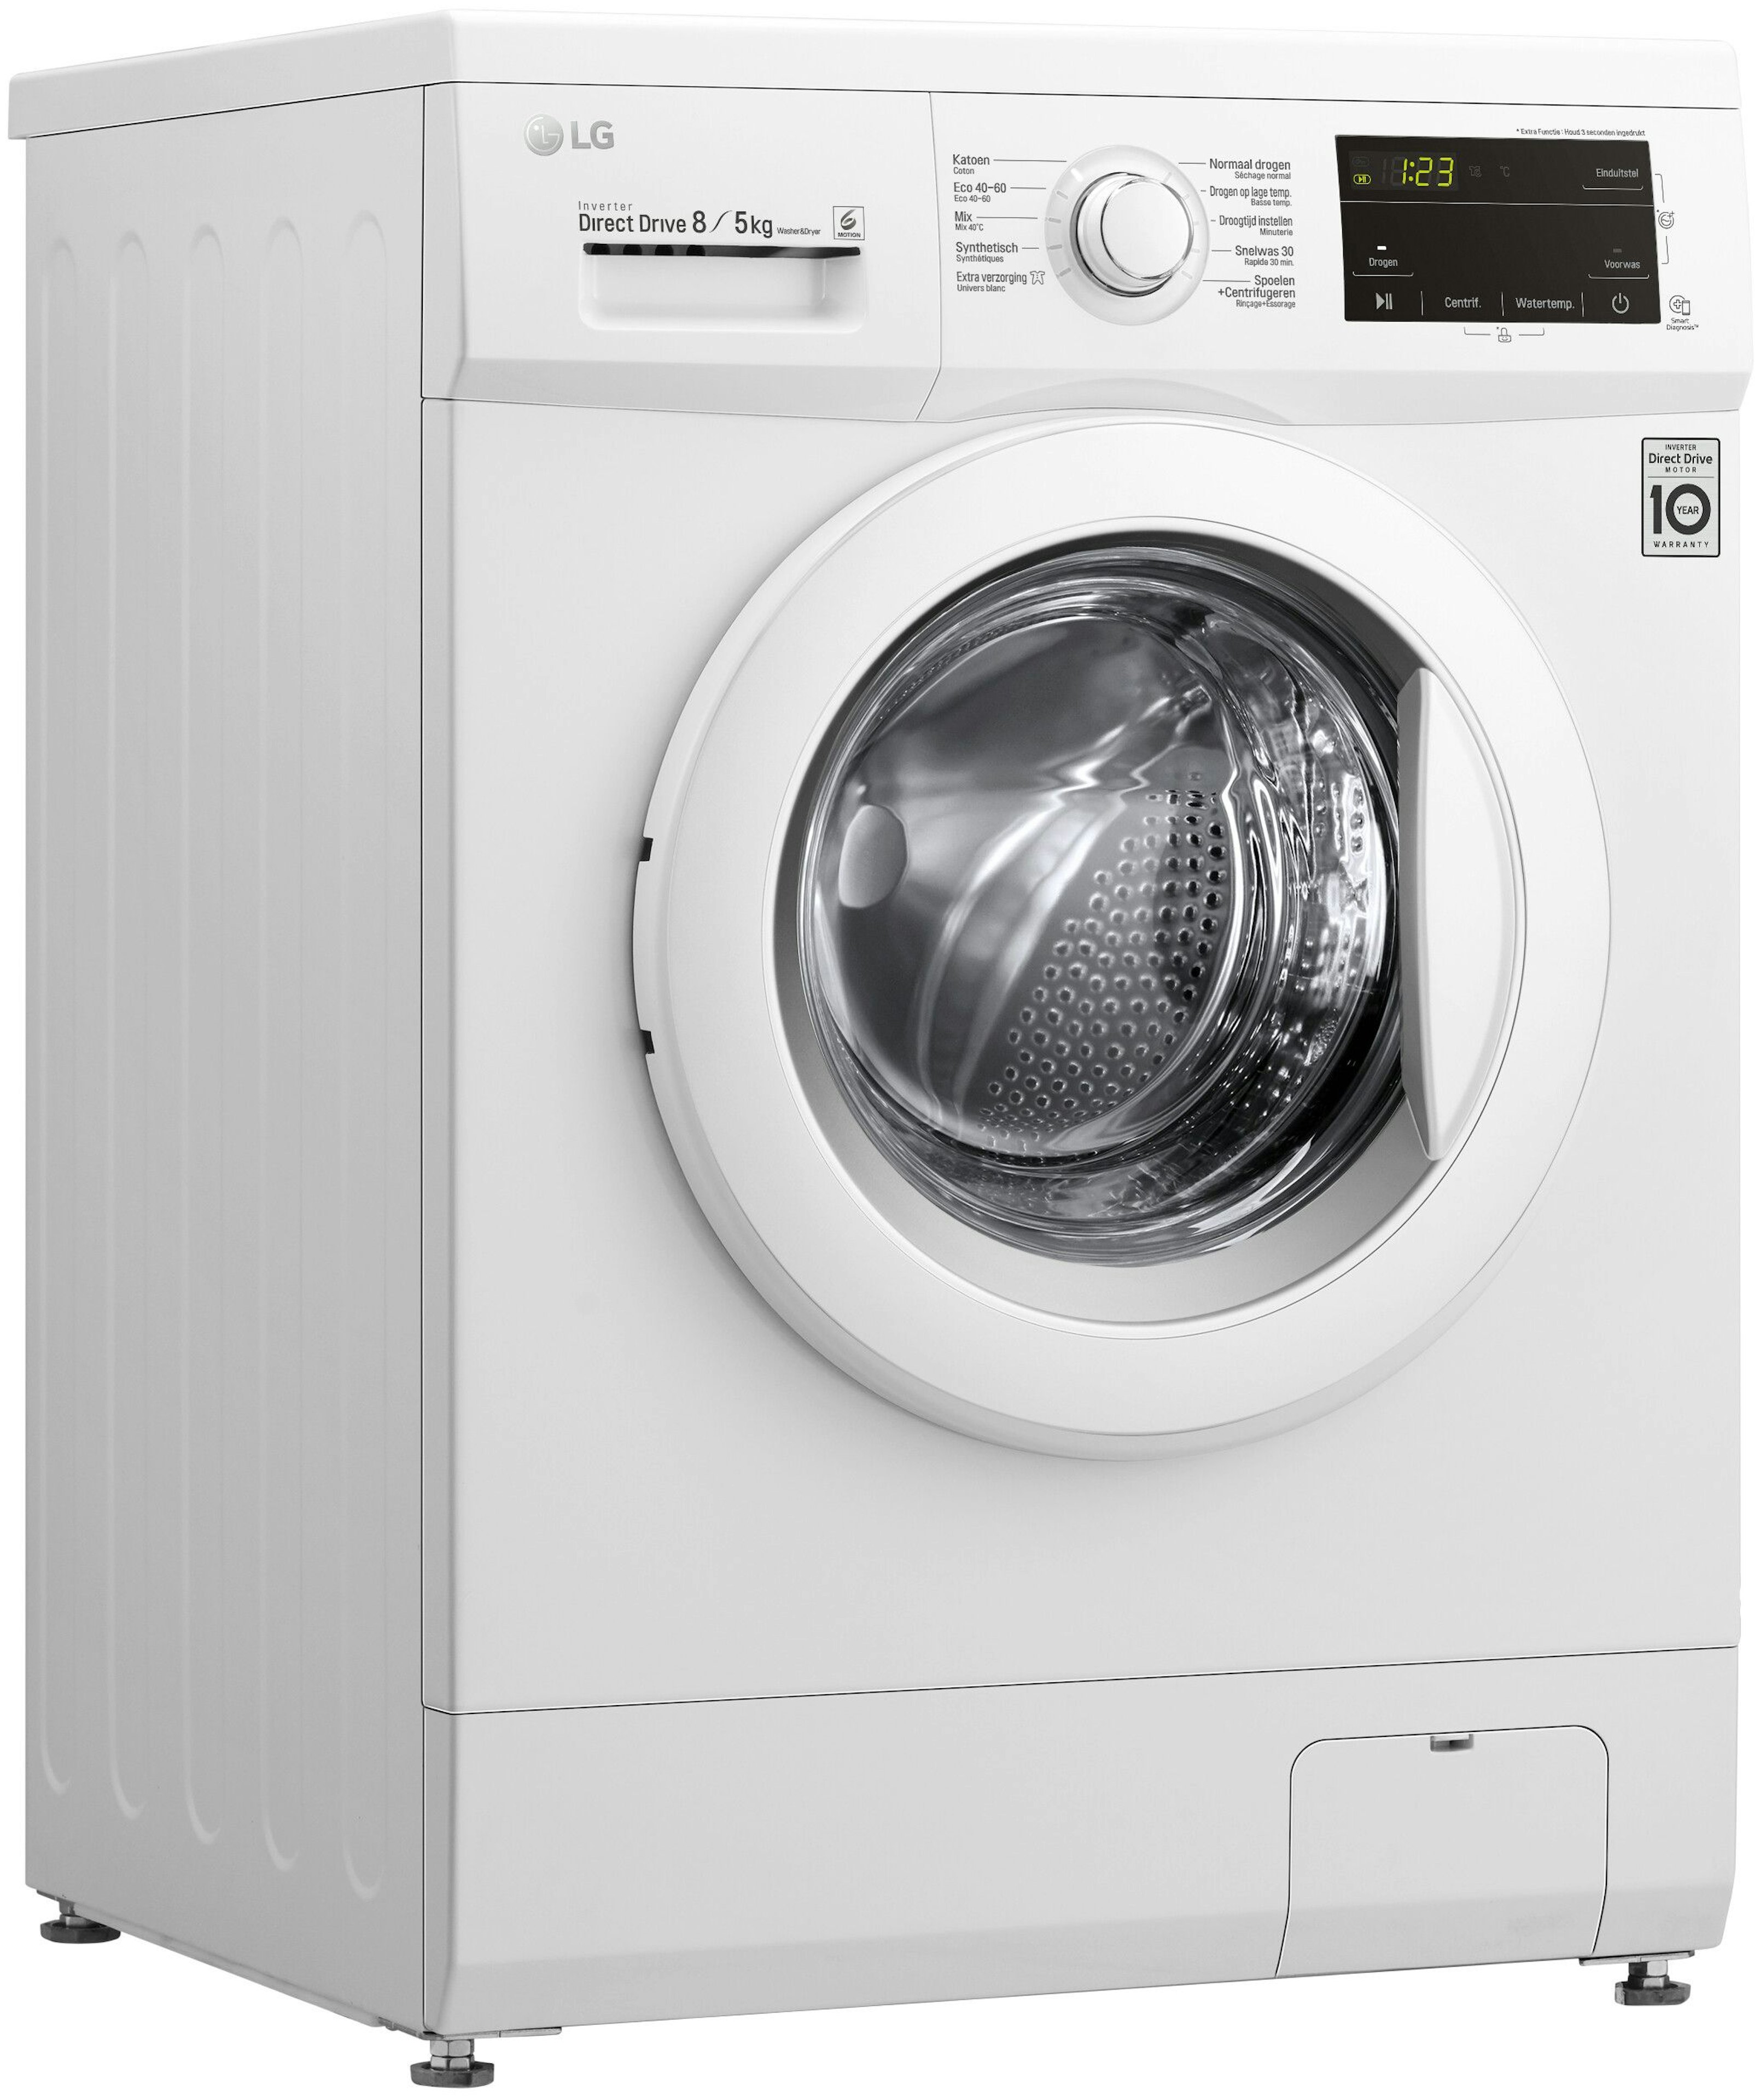 LG GD3M108N3  wasmachine afbeelding 5